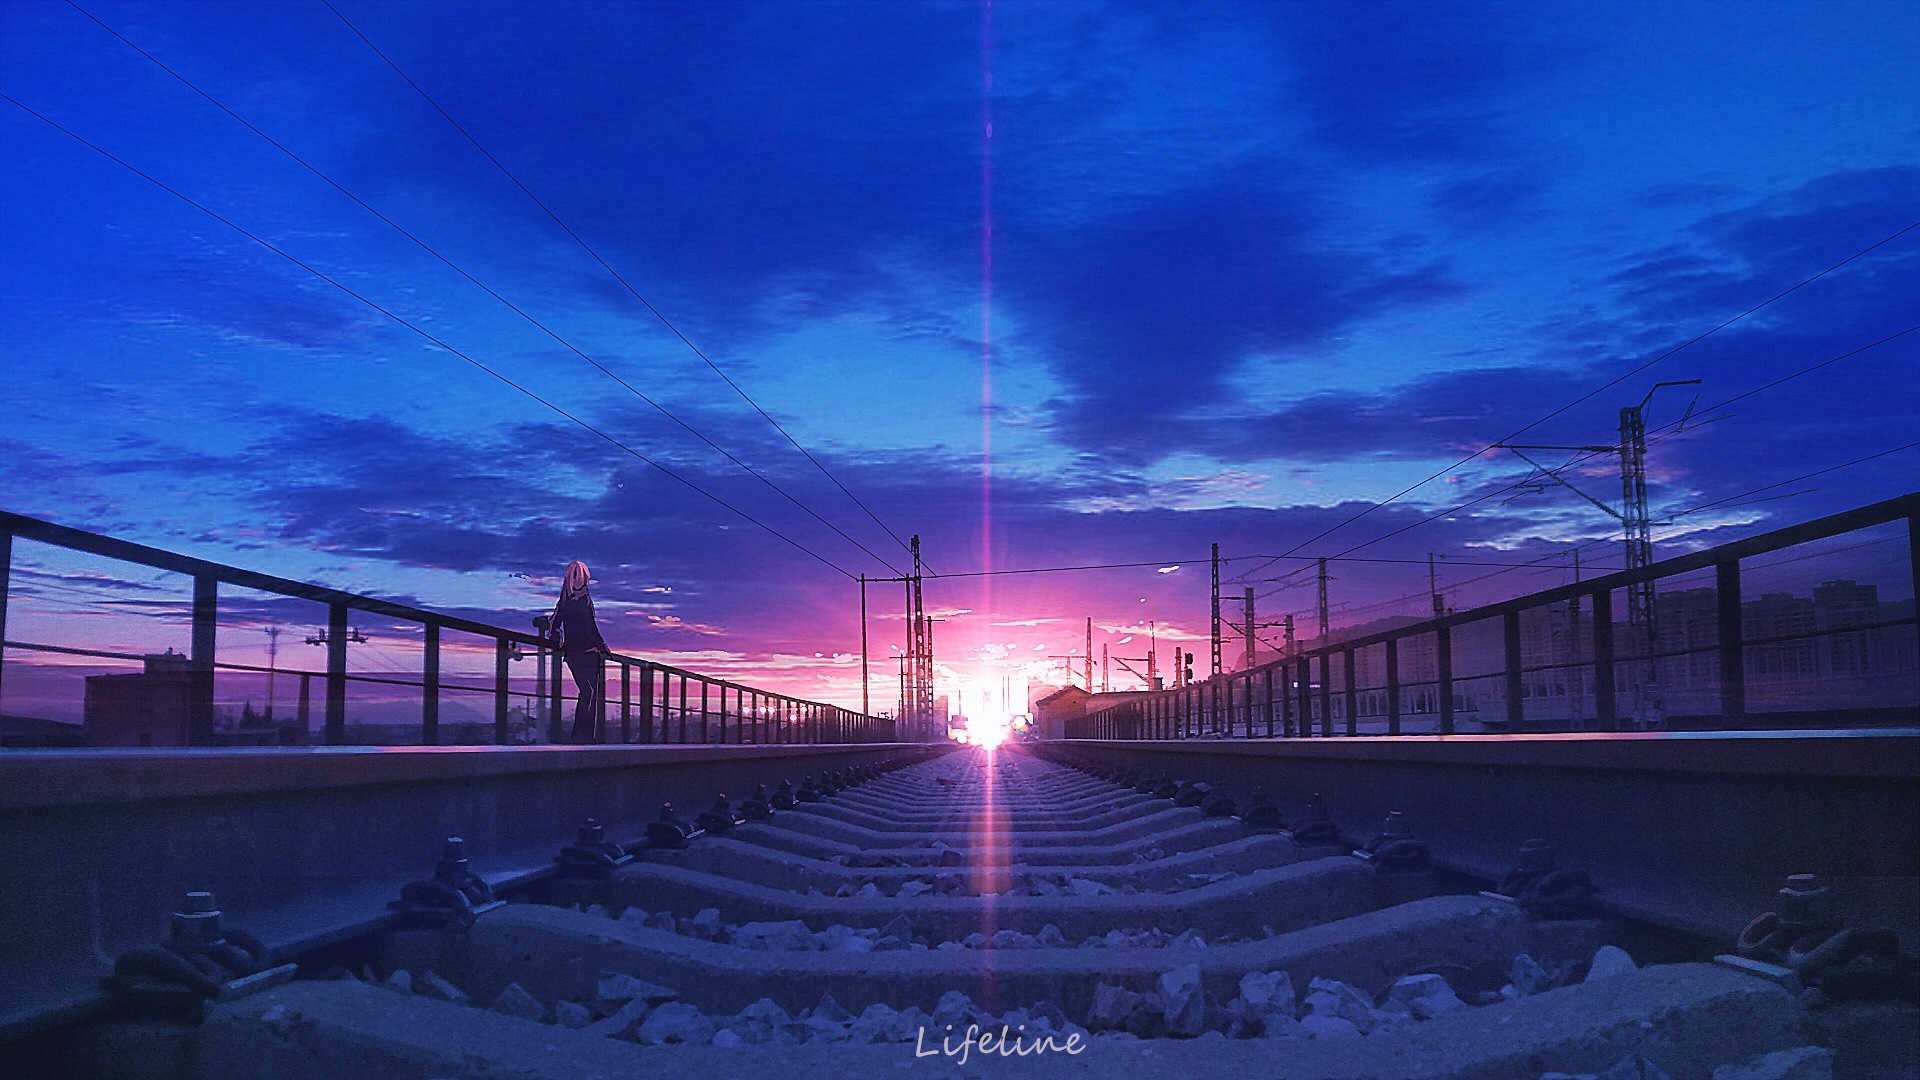 Anime 1920x1080 anime Lifeline sky outdoors railway